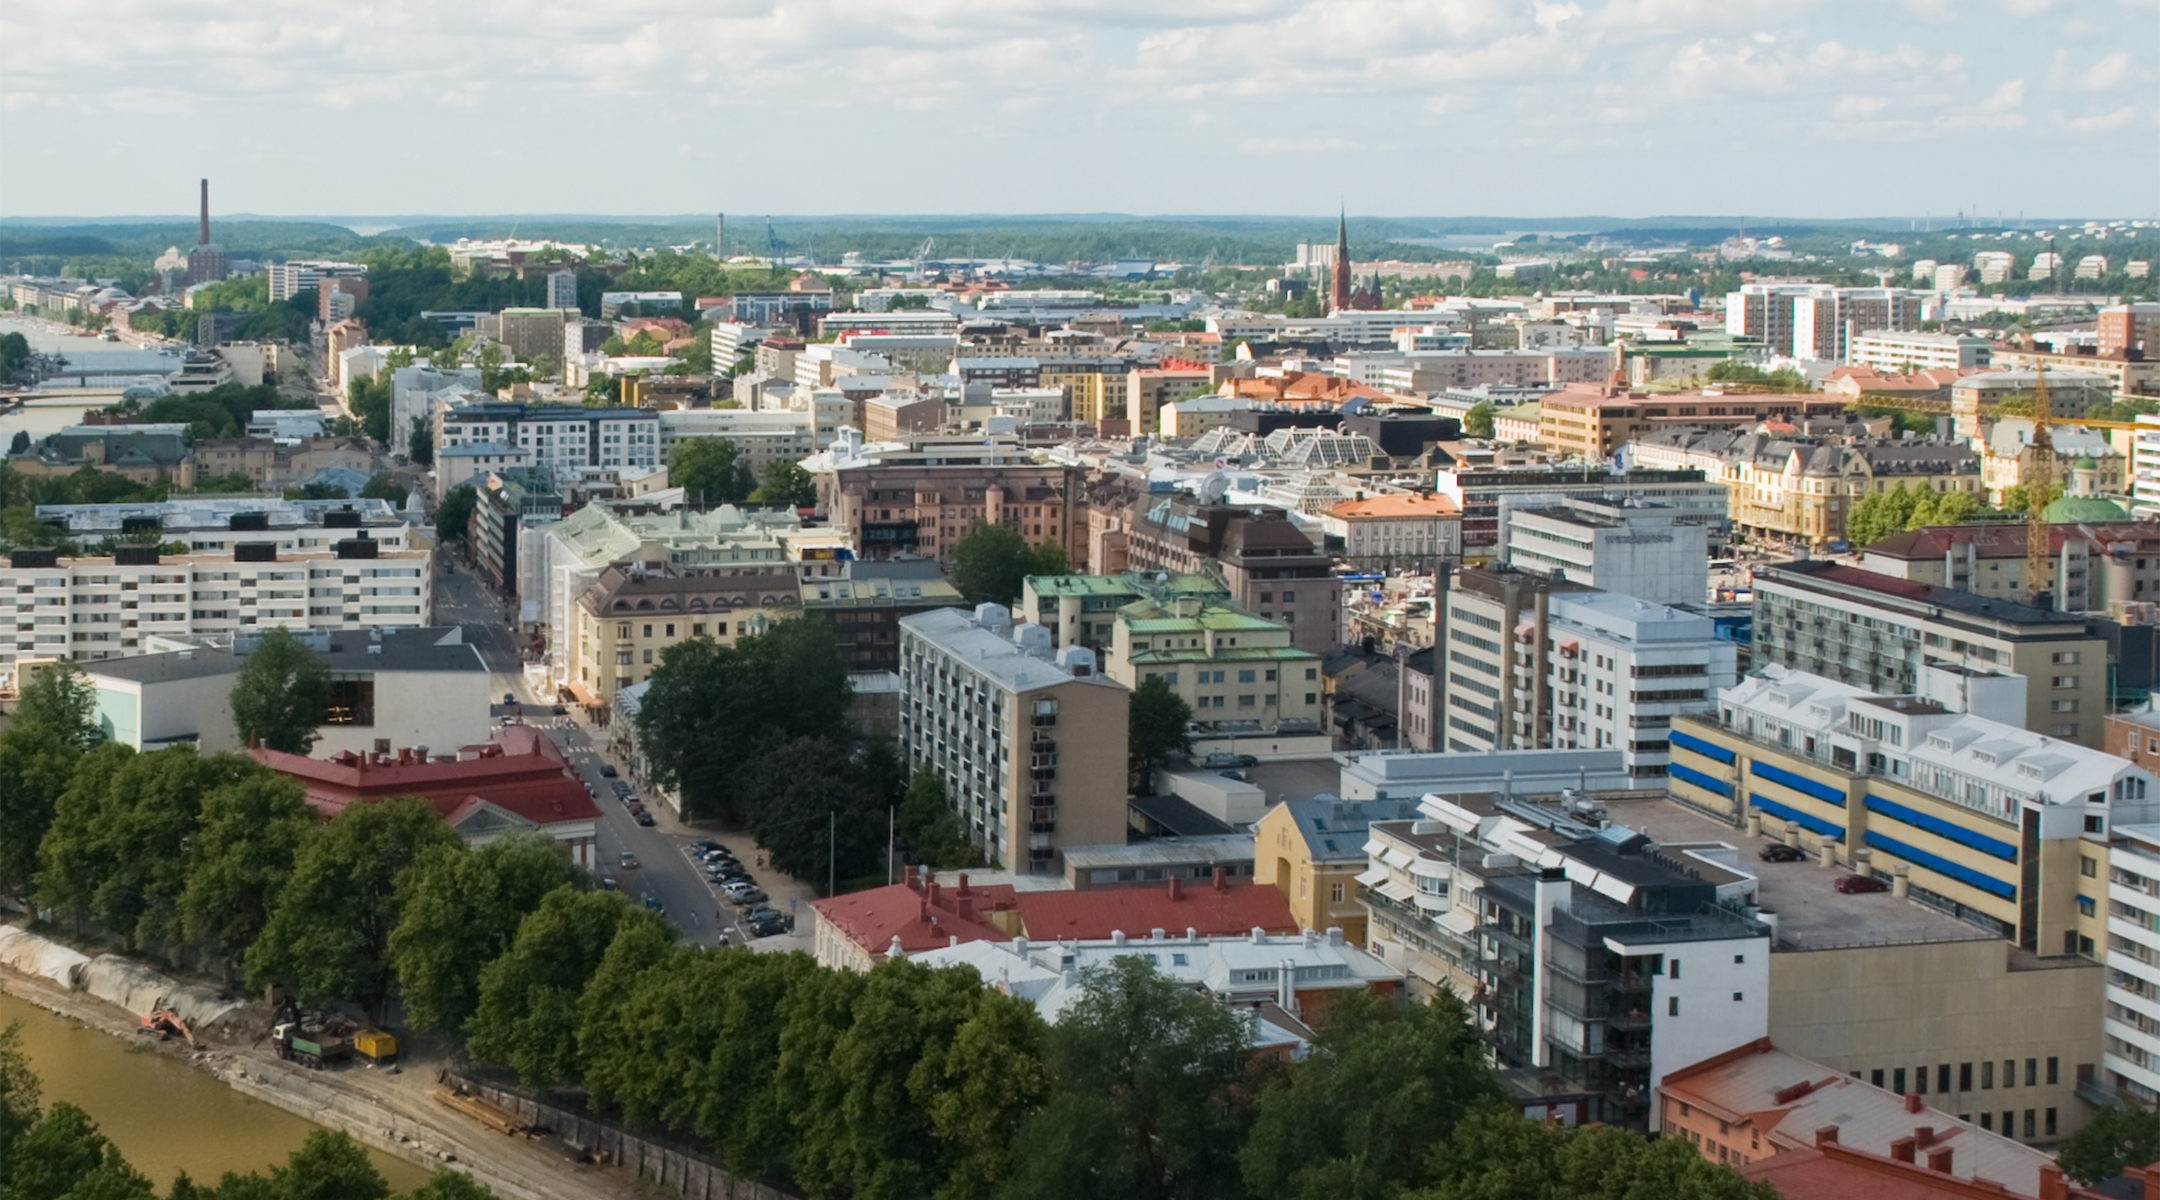 A view of Turku, Finland. (Wikimedia Commons)